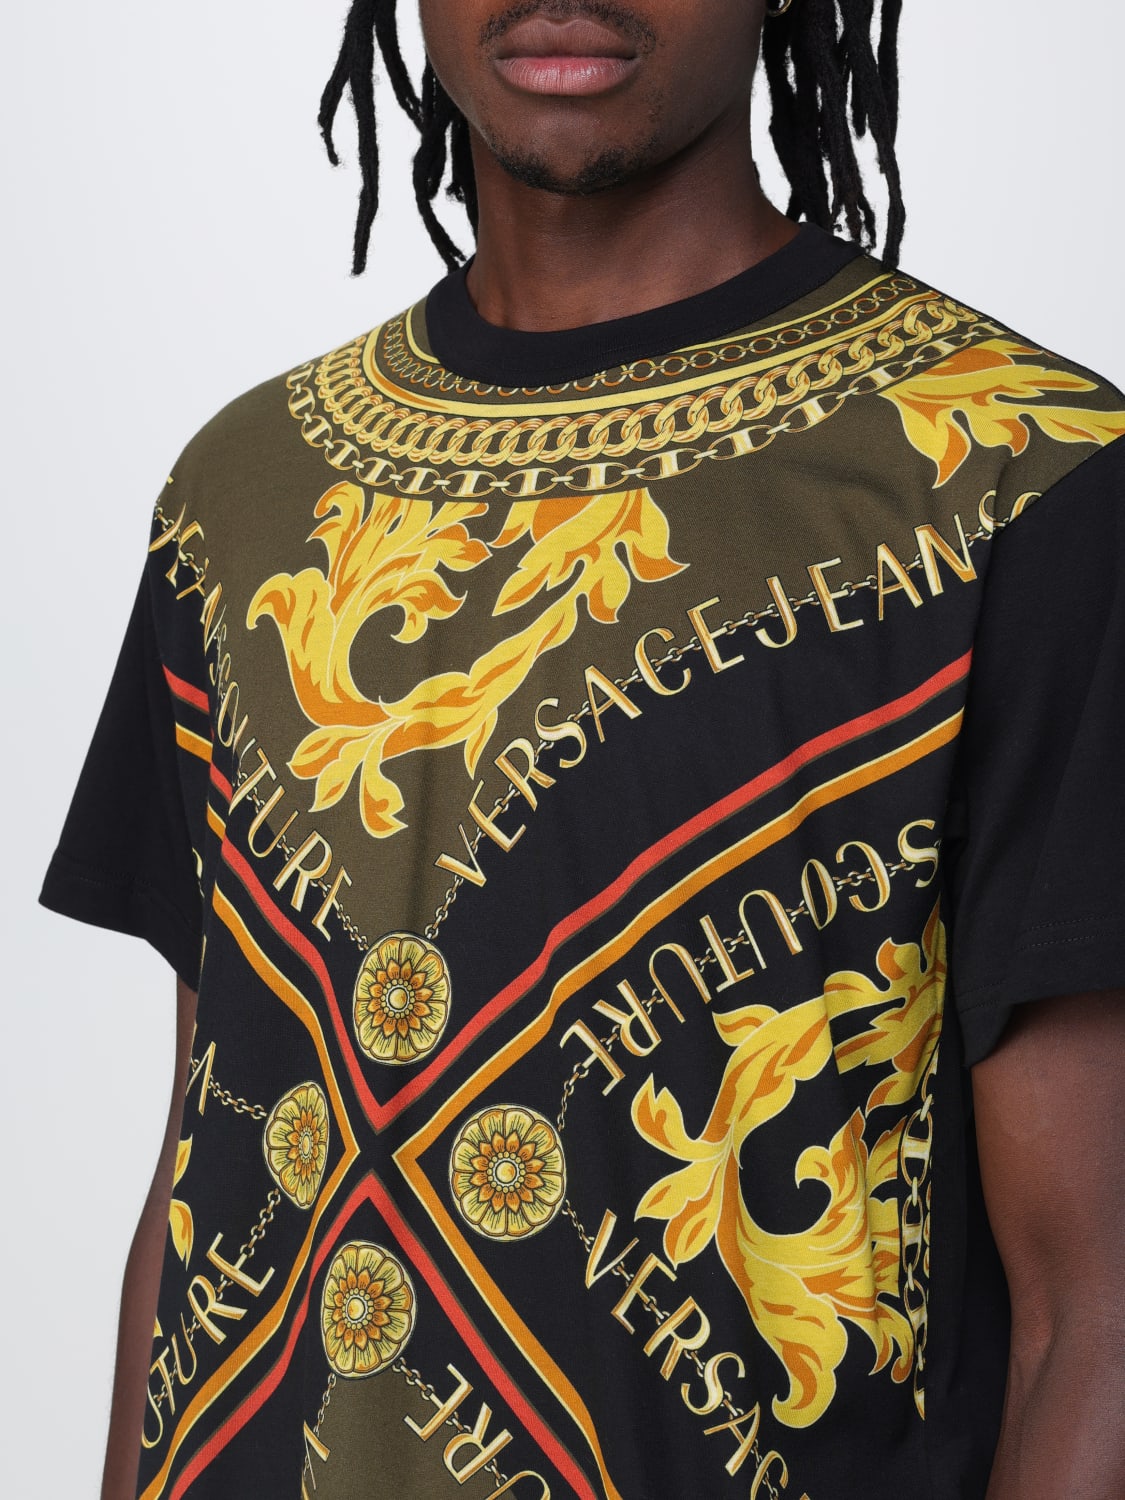 domæne Klan teleskop VERSACE JEANS COUTURE: printed t-shirt - Black | Versace Jeans Couture t- shirt 75GAH6RFJ0001 online at GIGLIO.COM